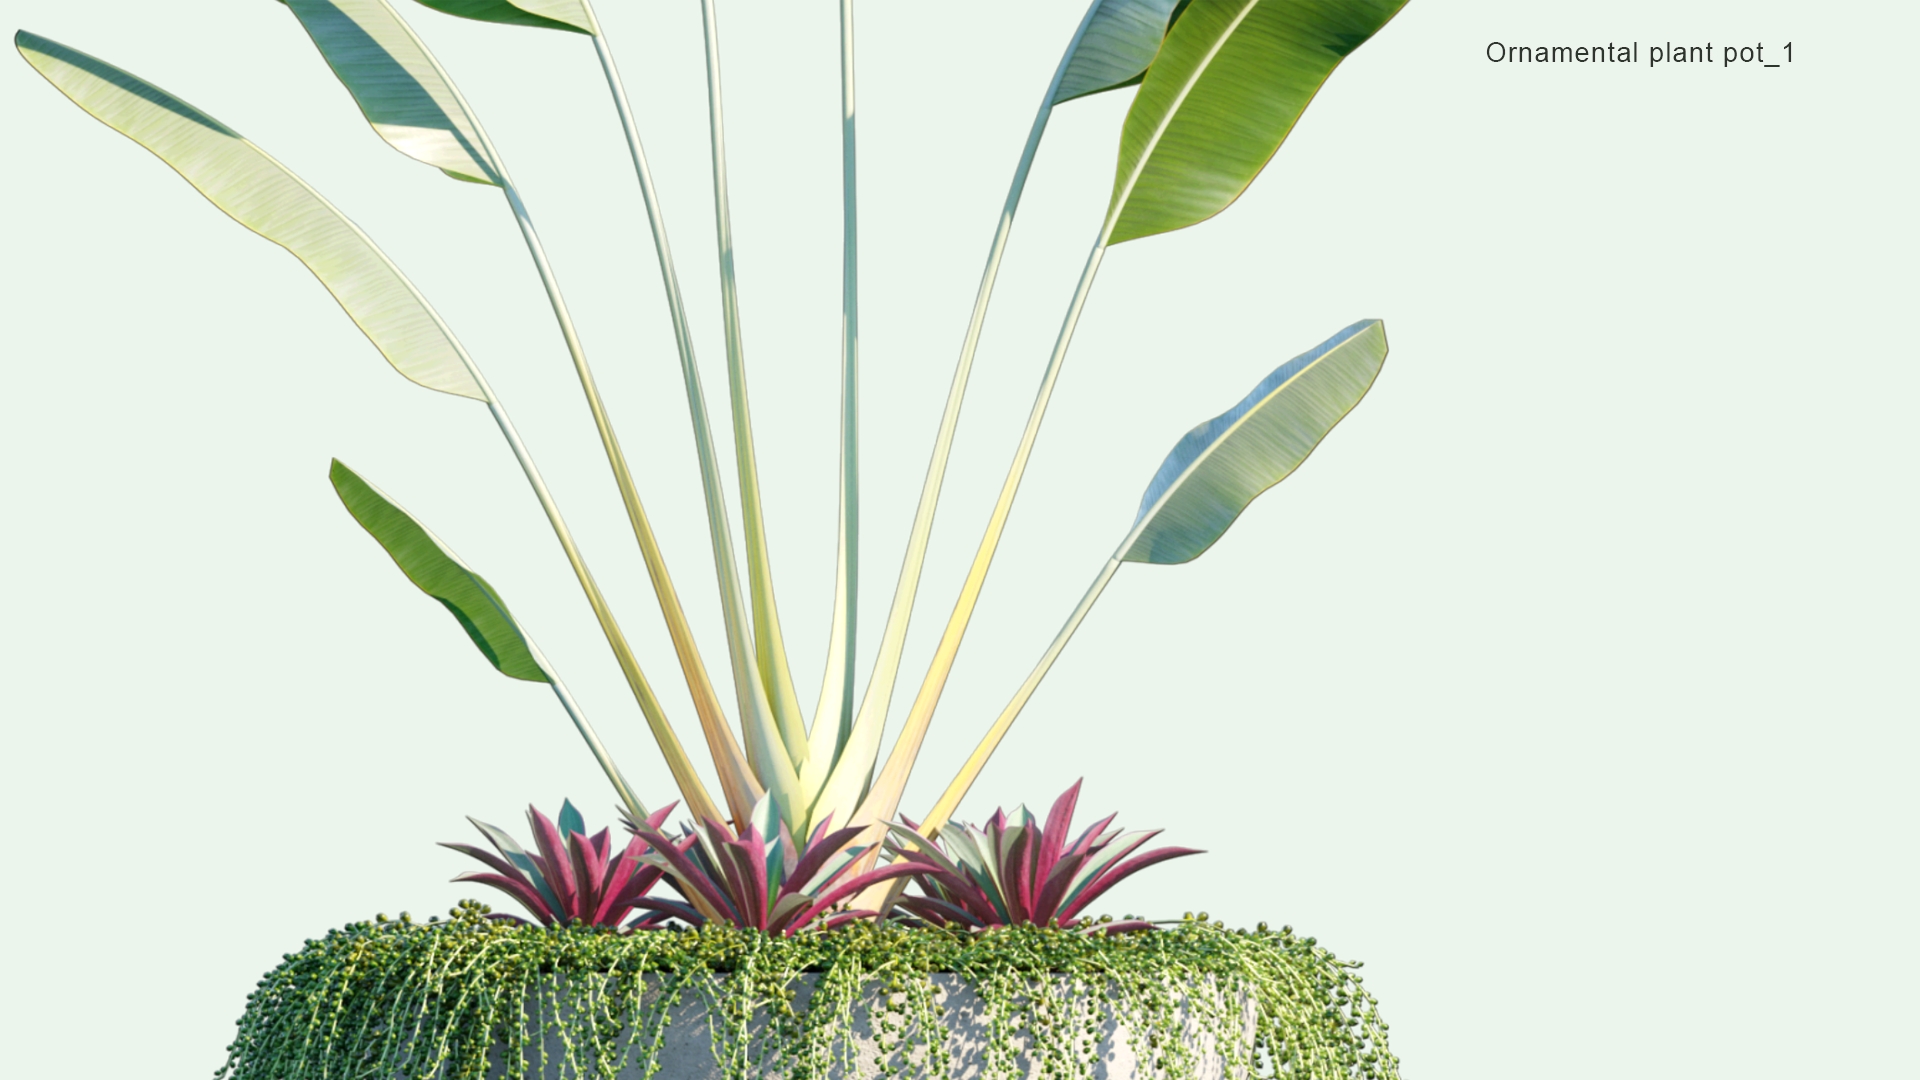 2D Ornamental Pot Plant 01 - Ravenala Madagascariensis, Sedum Morganianum, Tradescantia Spathacea